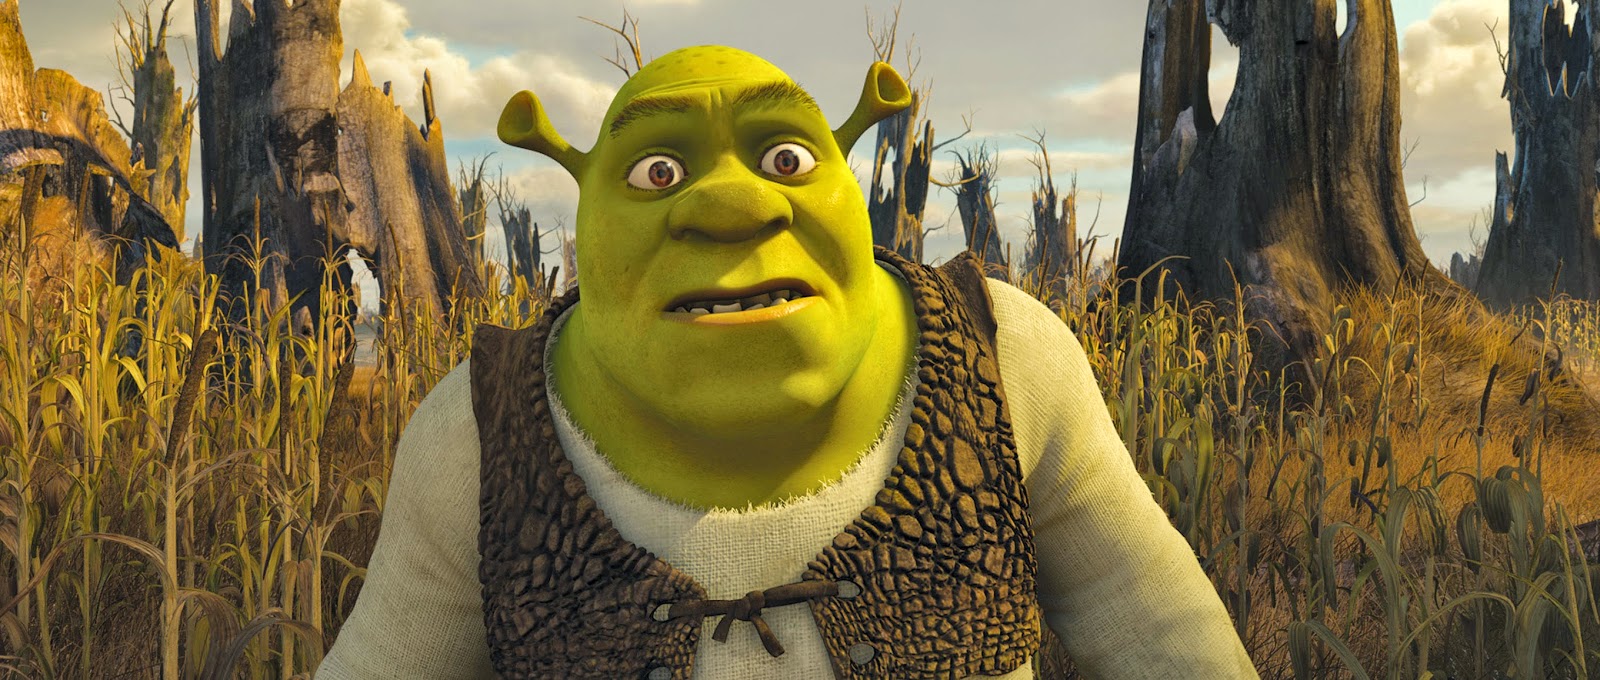 Shrek - Dance Like an Ogre (DreamWorks) on Make a GIF